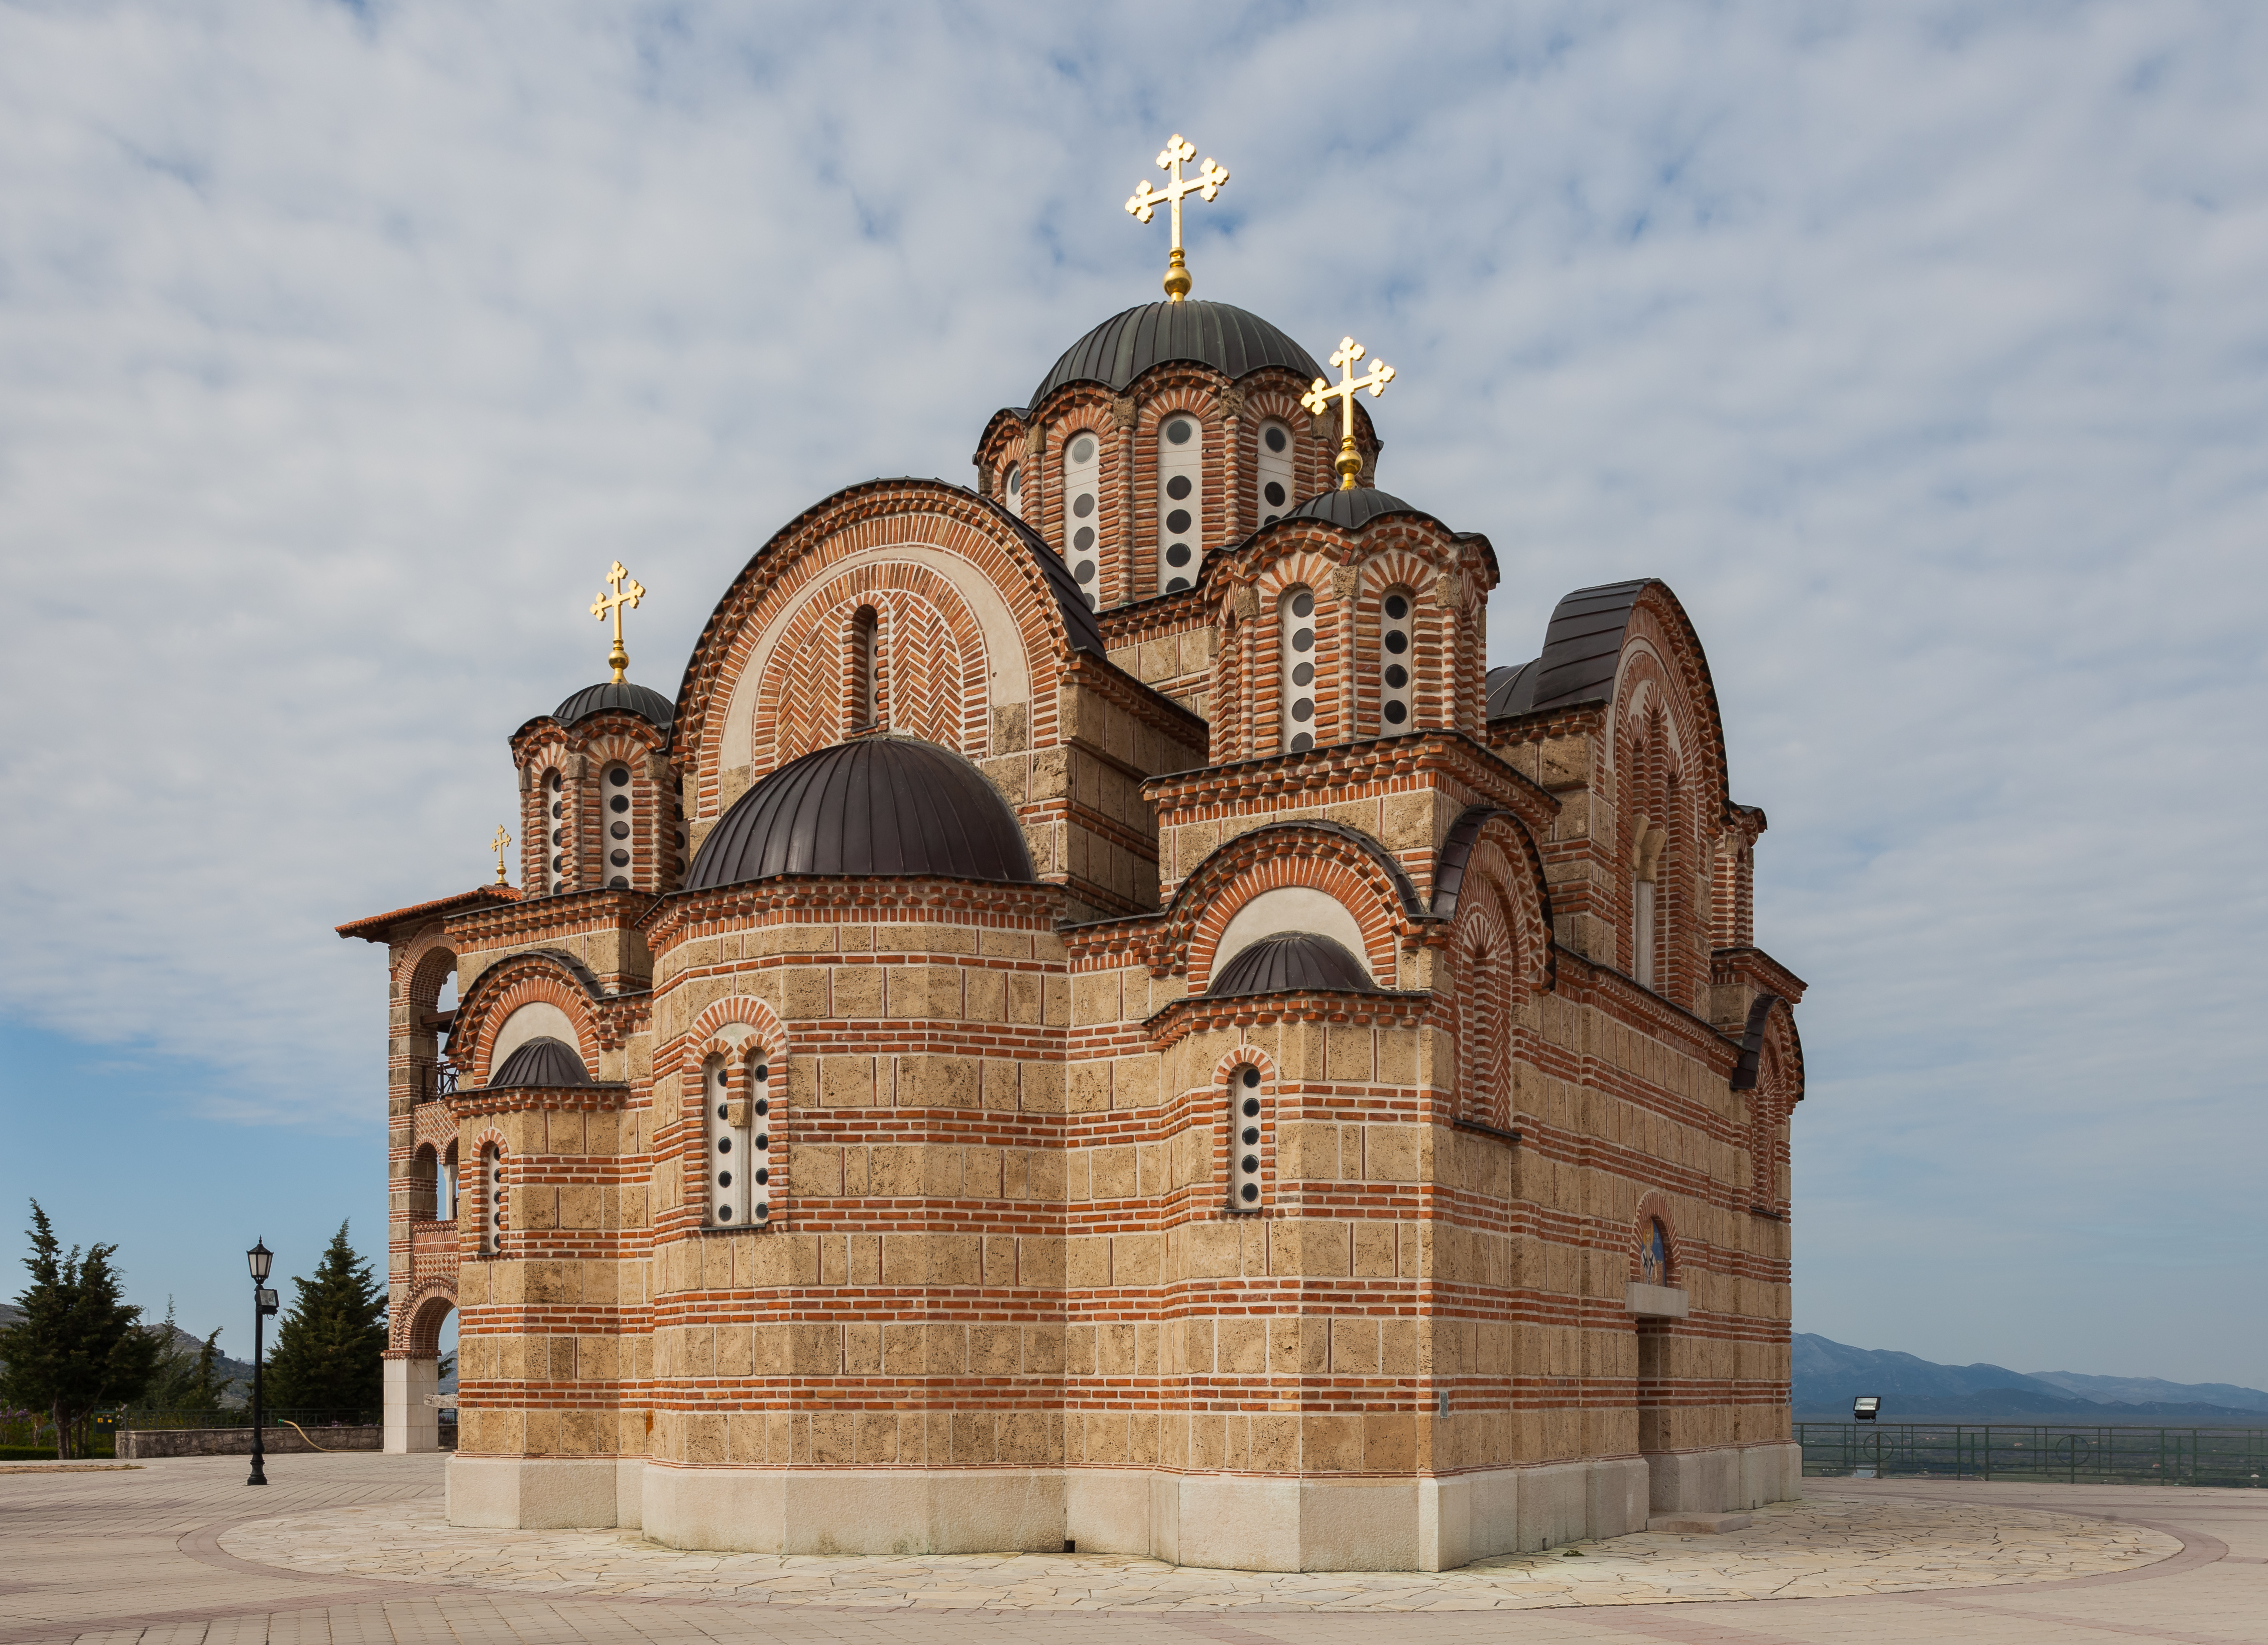 Iglesia Nova Gracanica, Trebinje, Bosnia y Herzegovina, 2014-04-14, DD 04